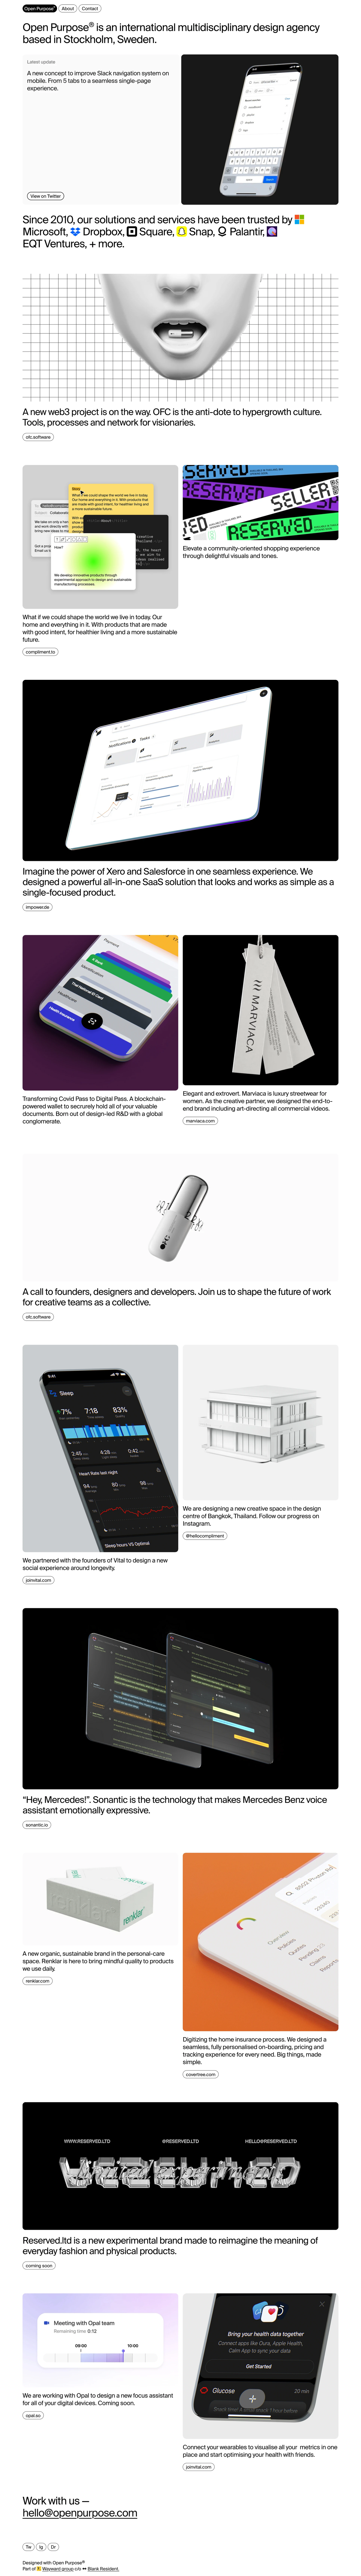 Open Purpose Landing Page Example: International multidisciplinary design agency based in Stockholm, Sweden.